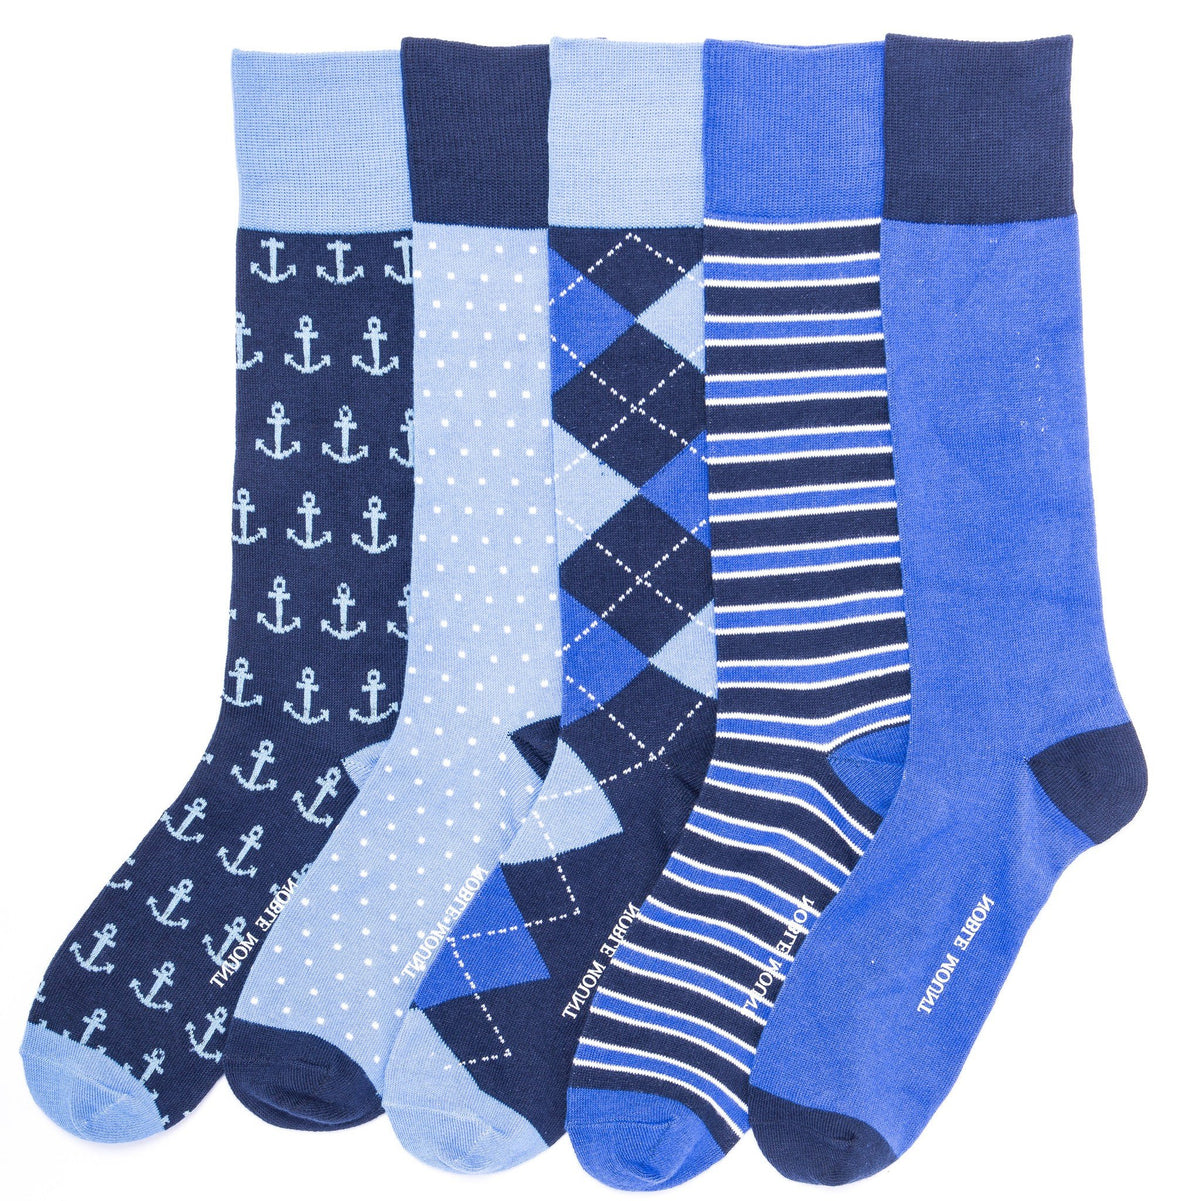 Men's Combed Cotton Weekday Dress Socks 5-Pack - Set A4